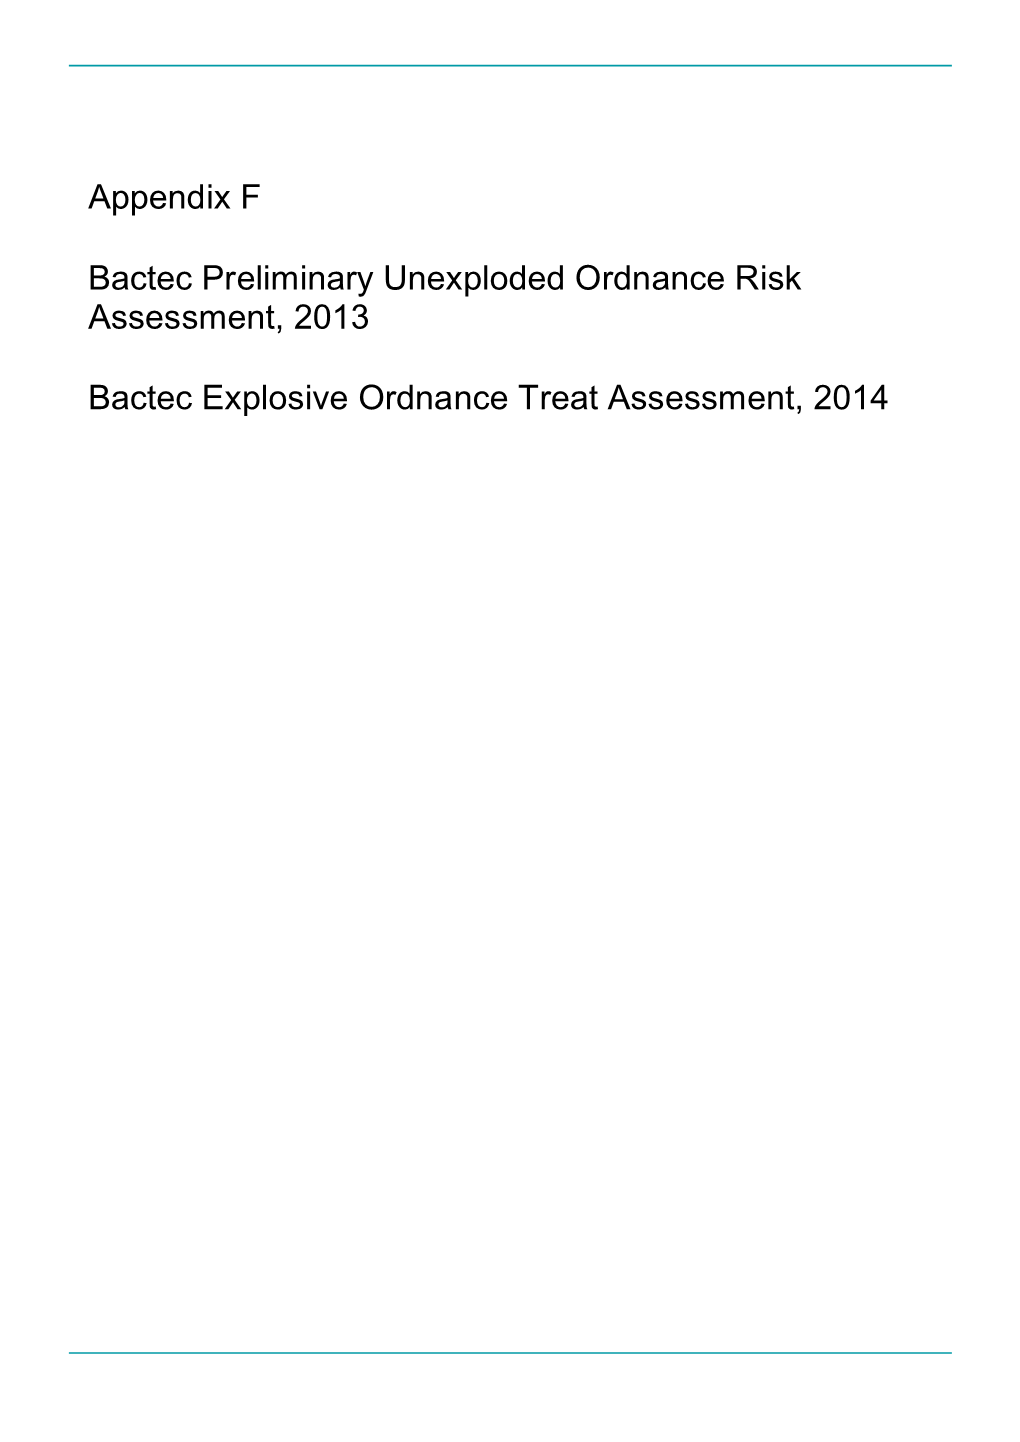 Appendix F Bactec Preliminary Unexploded Ordnance Risk